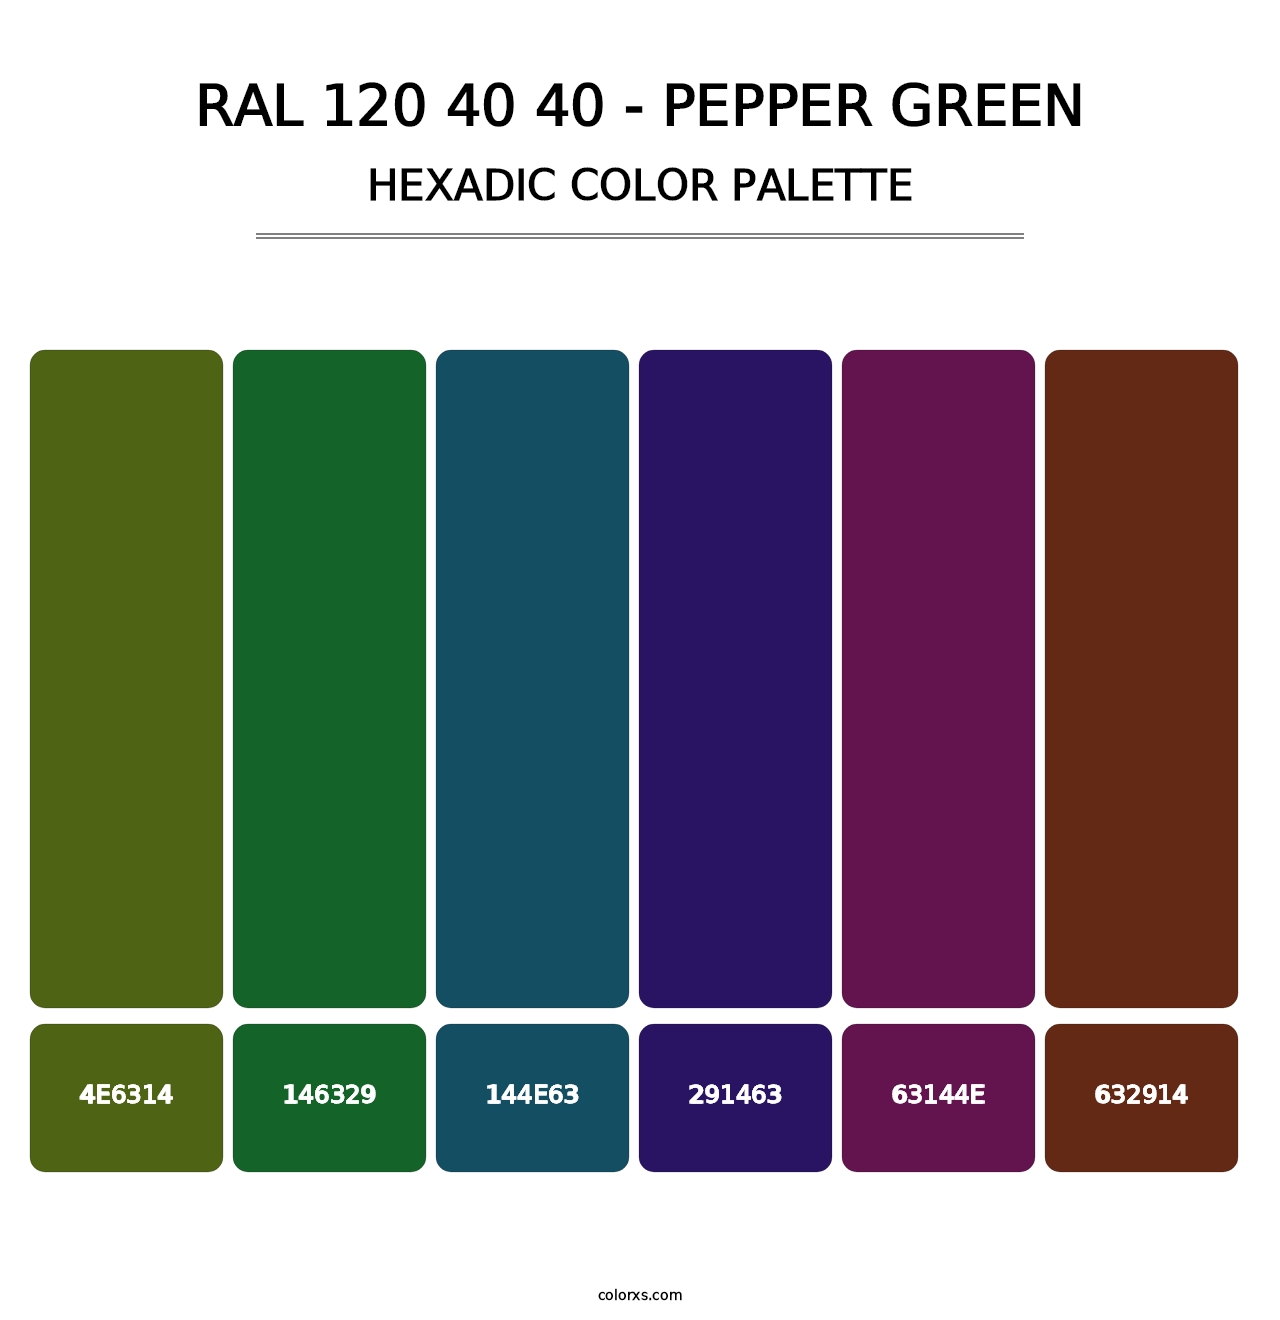 RAL 120 40 40 - Pepper Green - Hexadic Color Palette